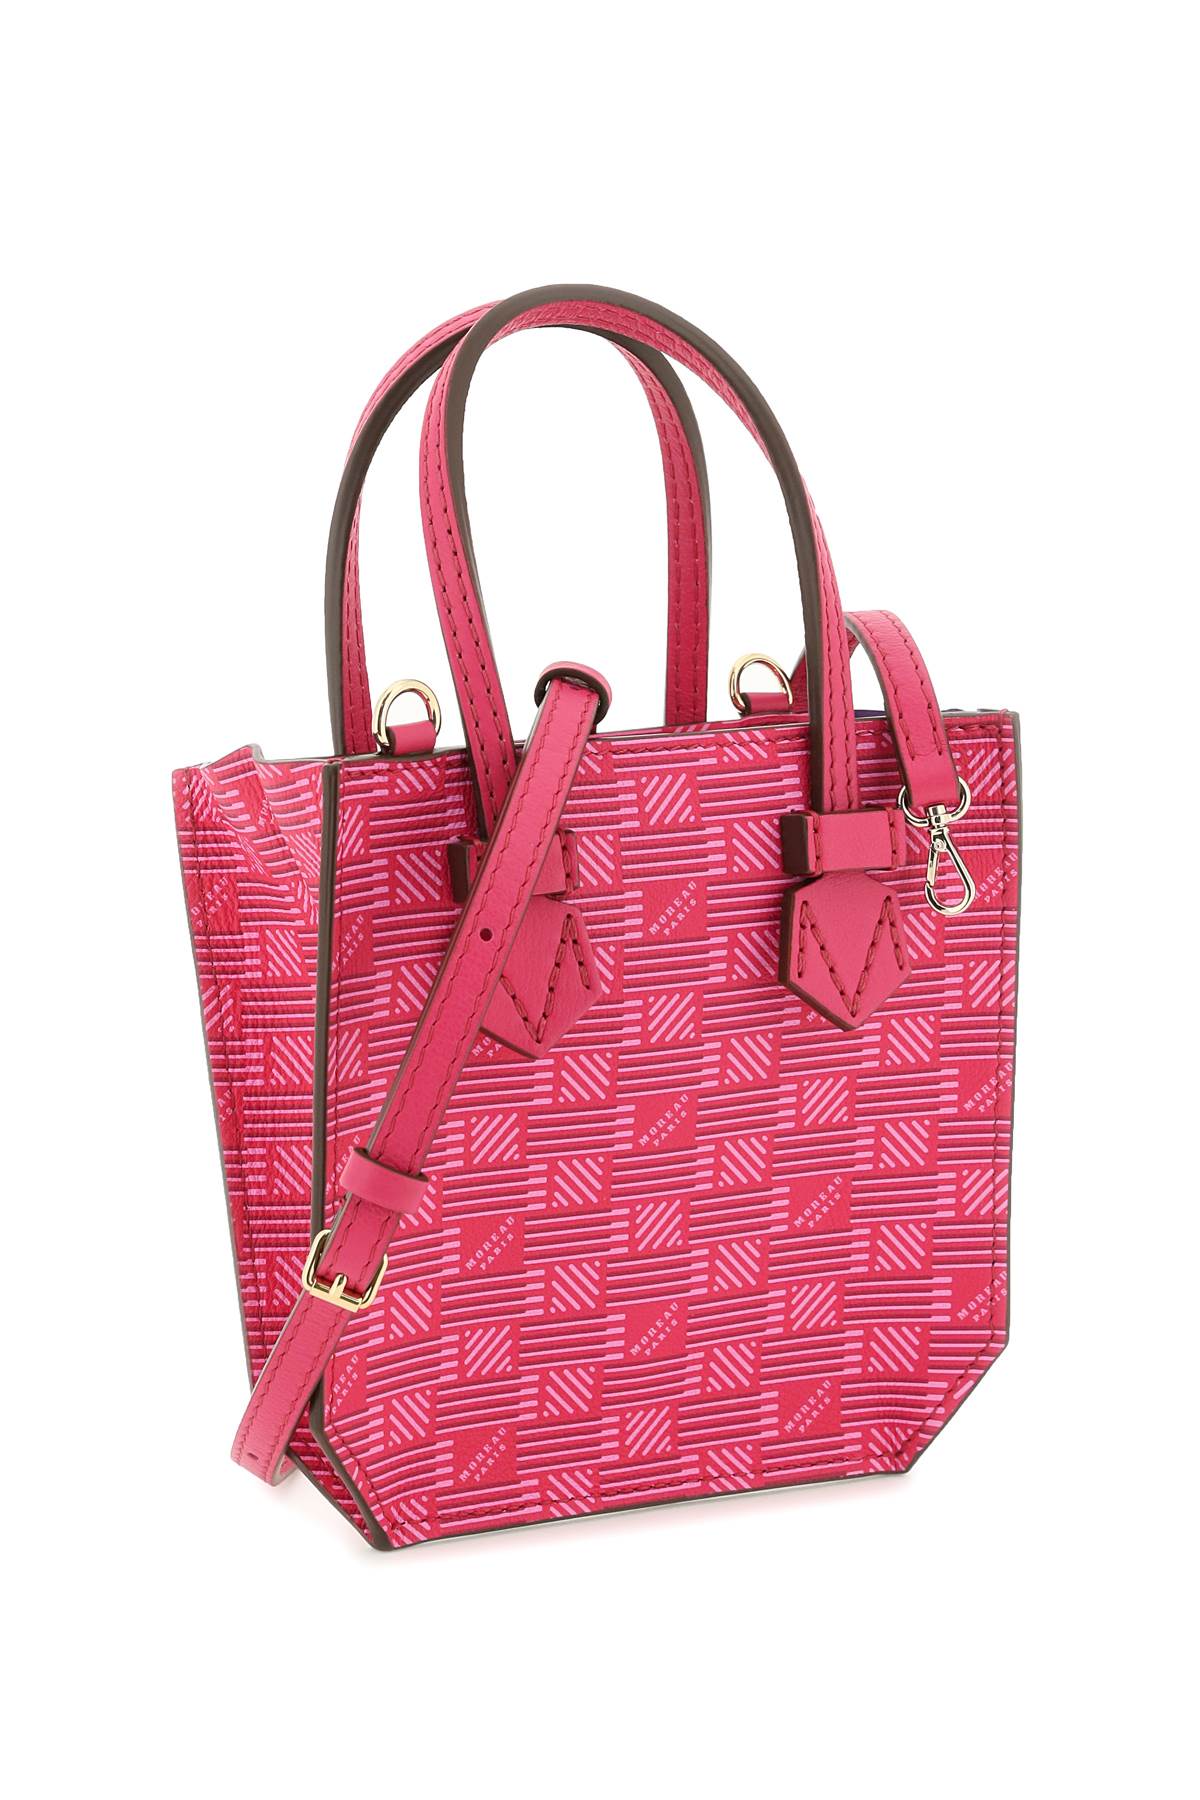 時尚風格 粉紅迷你手提包 // Fashionable Style - Pink Mini Handbag